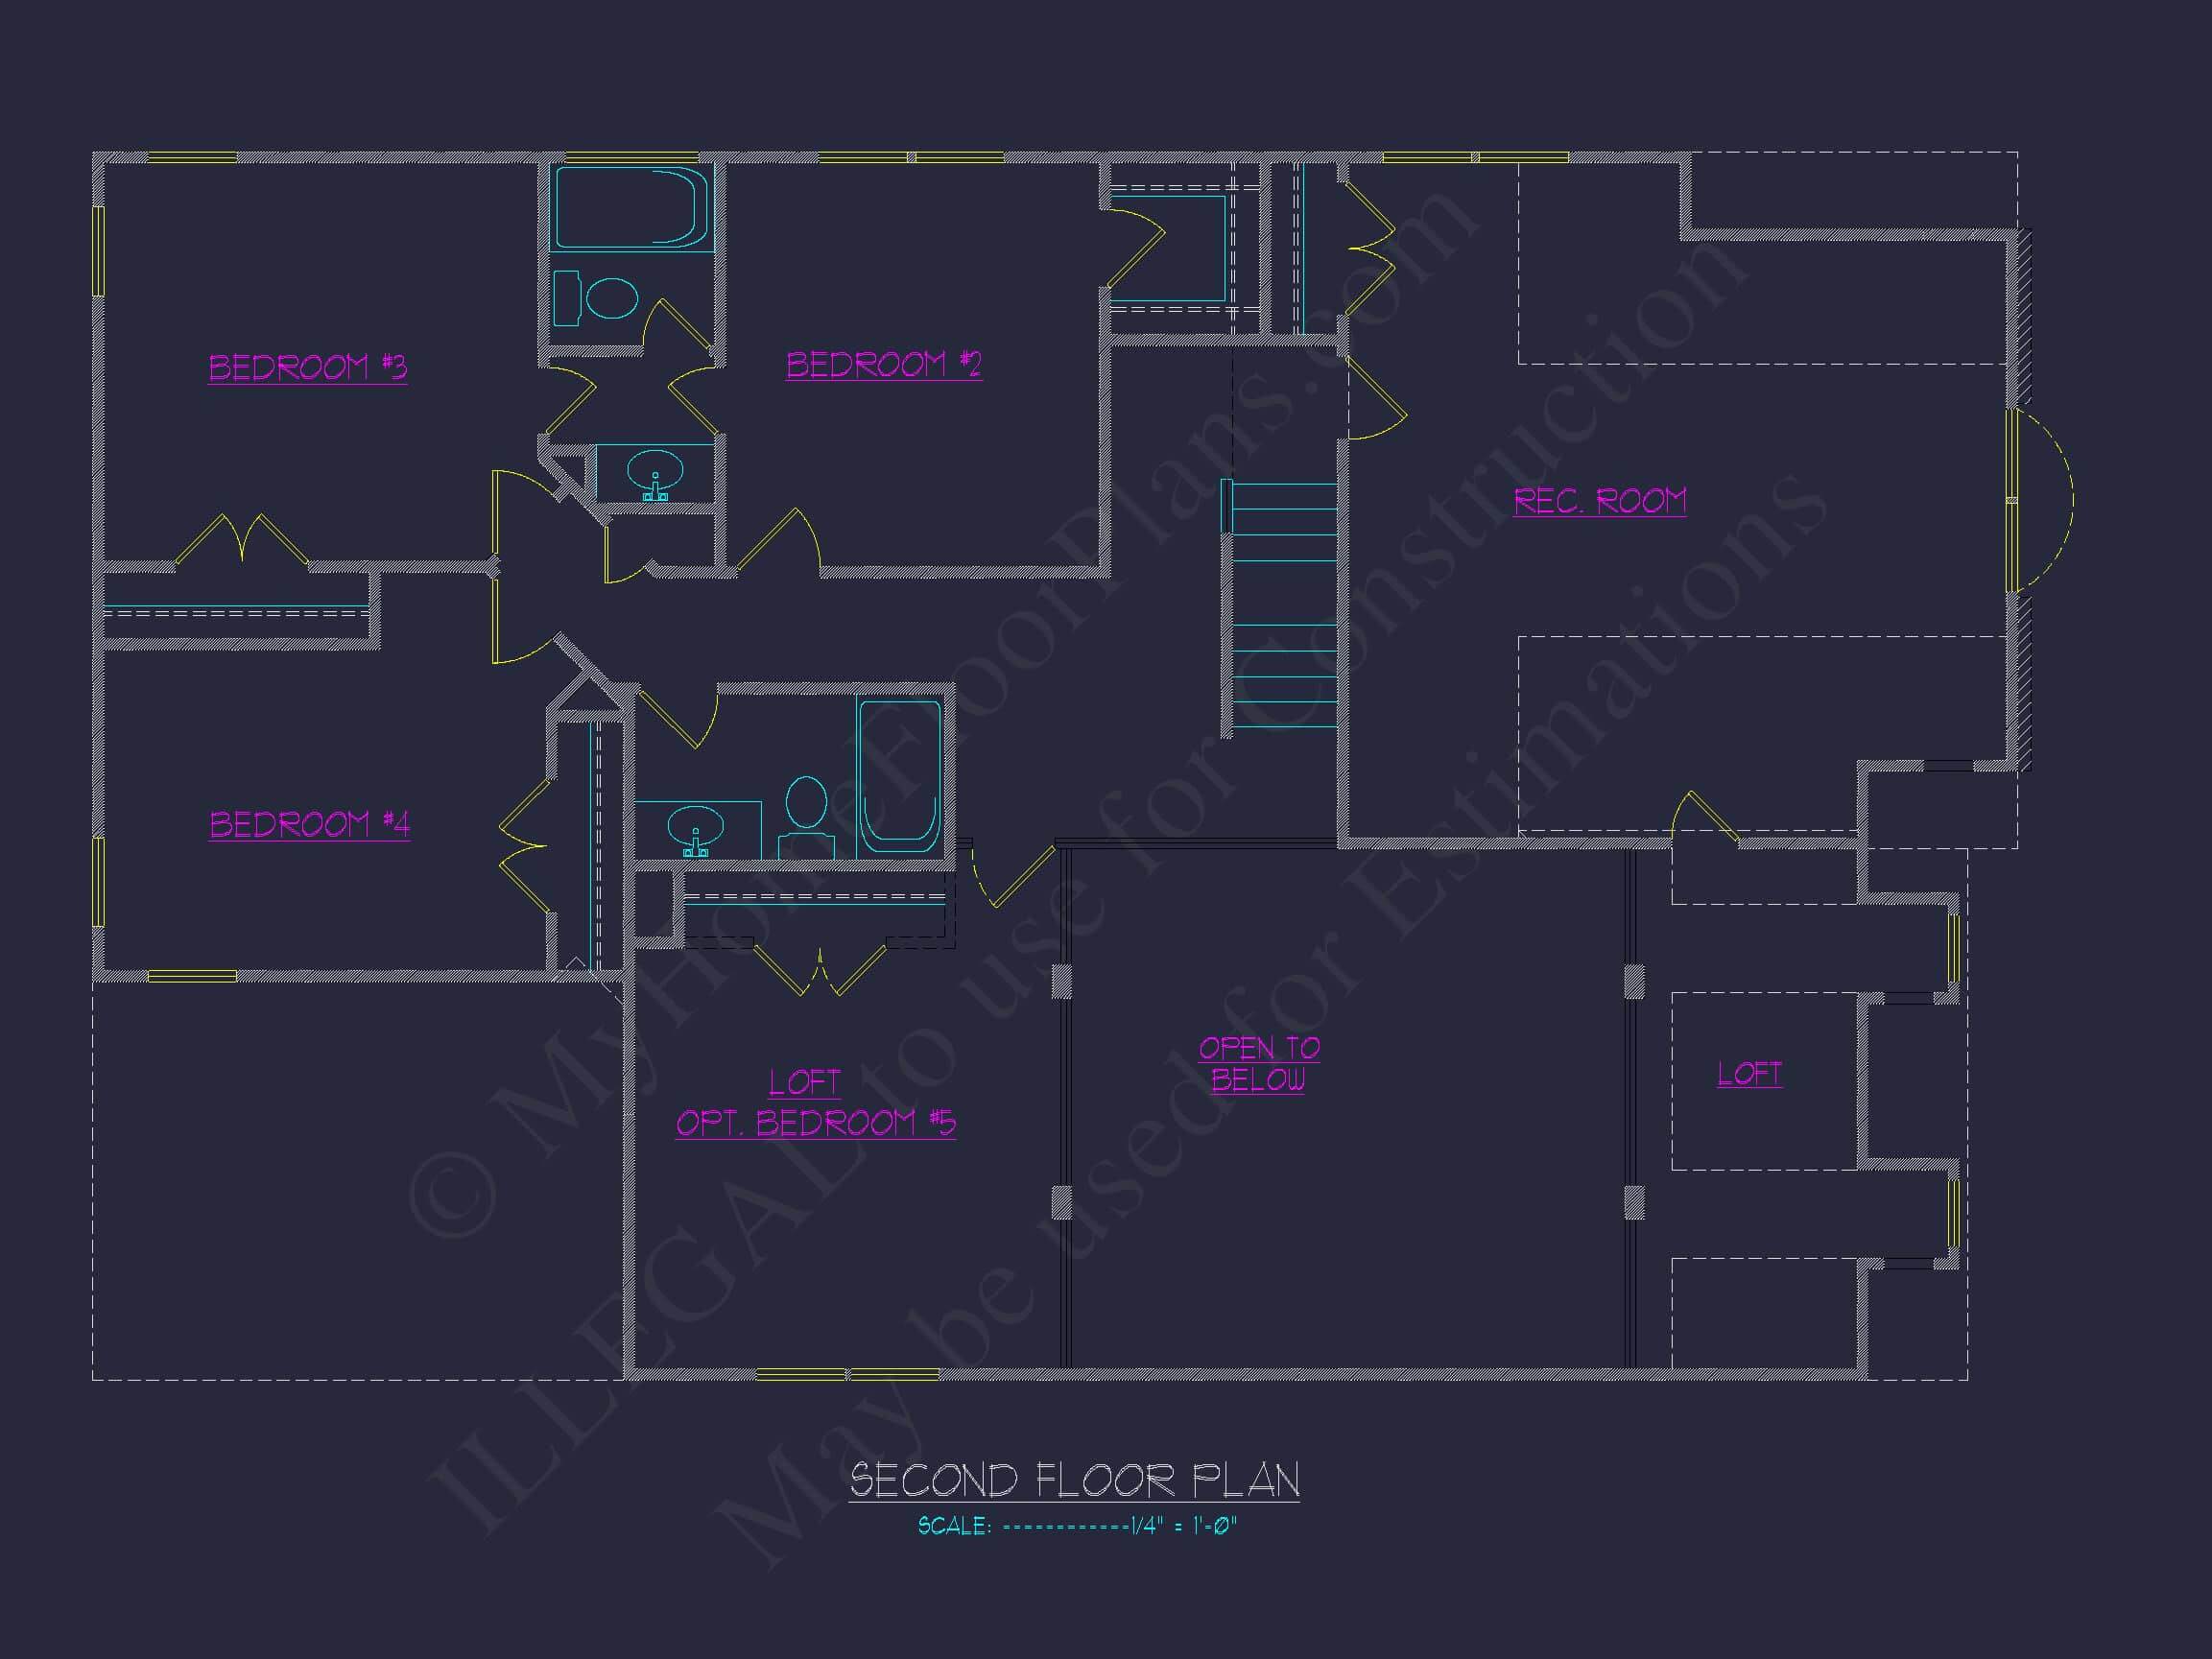 Modern Craftsman Home Plan: 5-Bedroom, 3.5-Bath Floor Plan